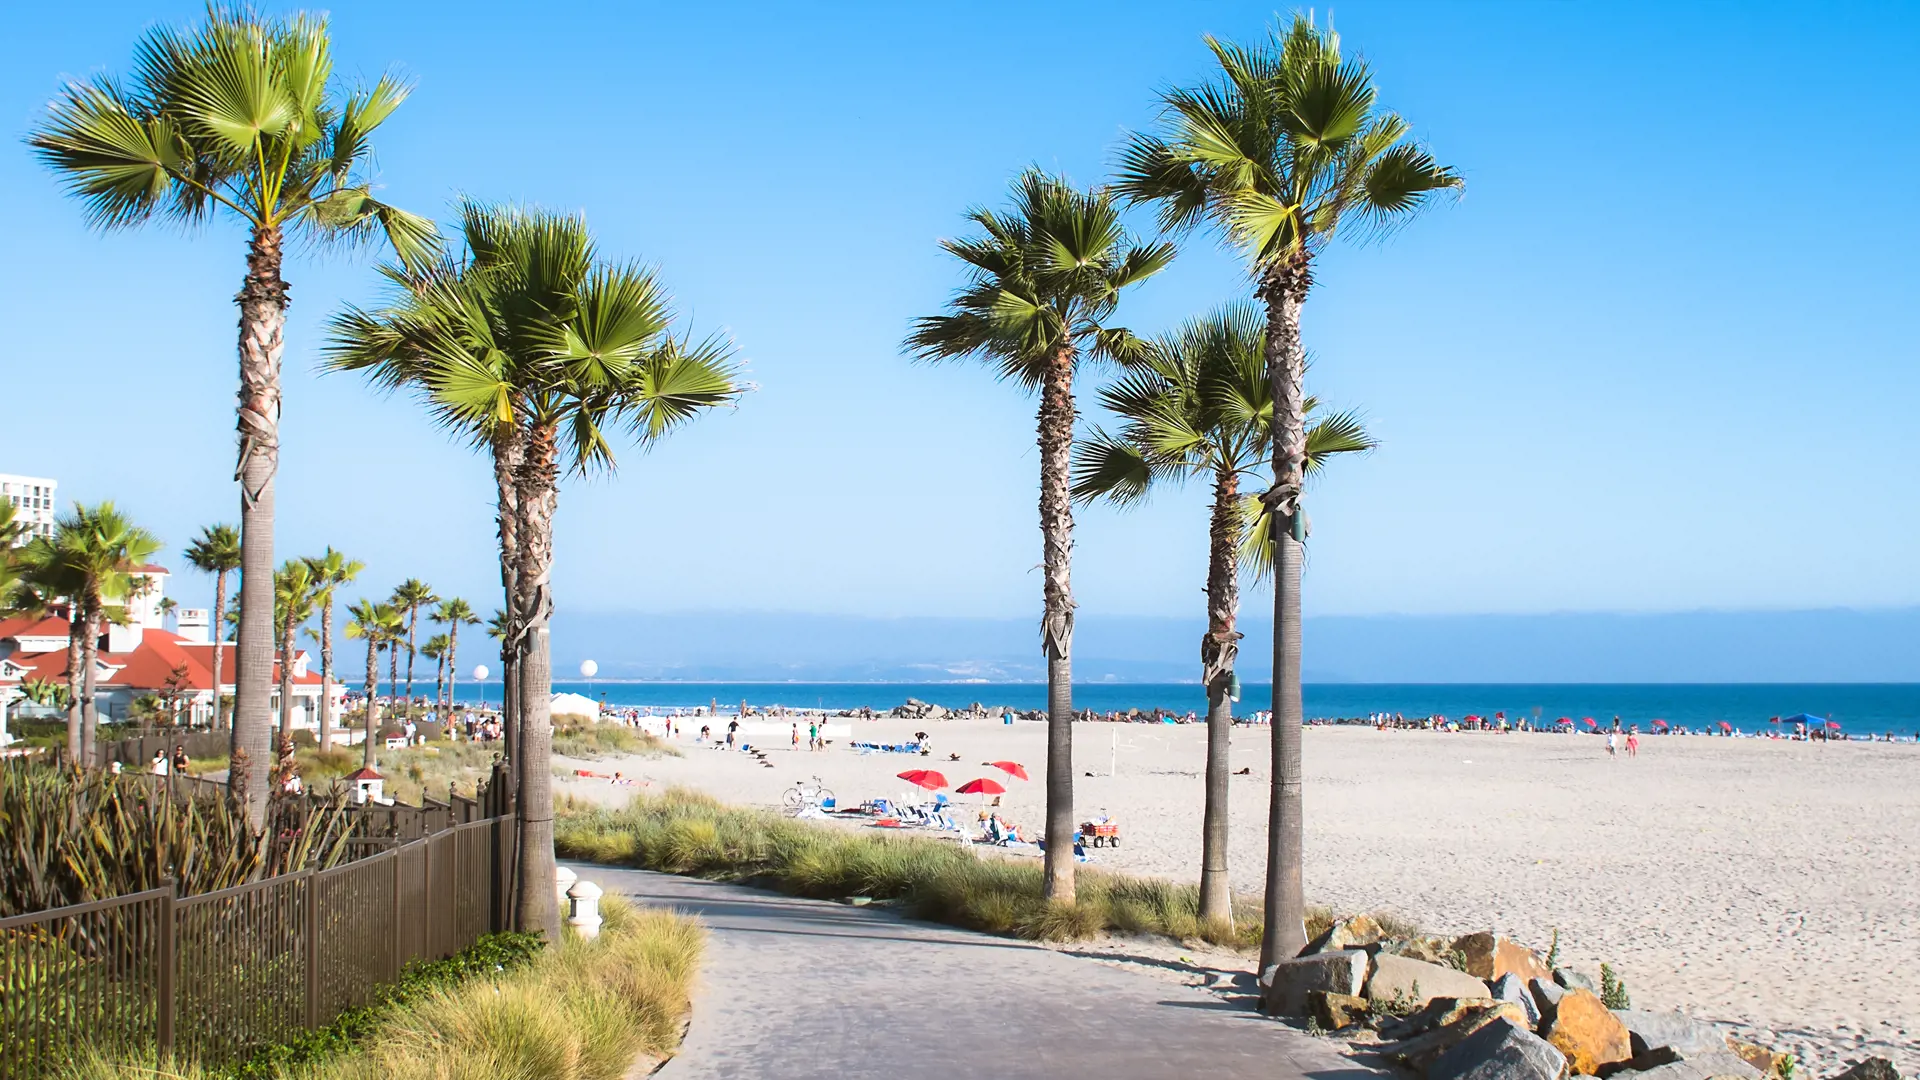 shutterstock_145985252 Beach and Palm Trees in San Diego, Southern California Coast, USA.jpg